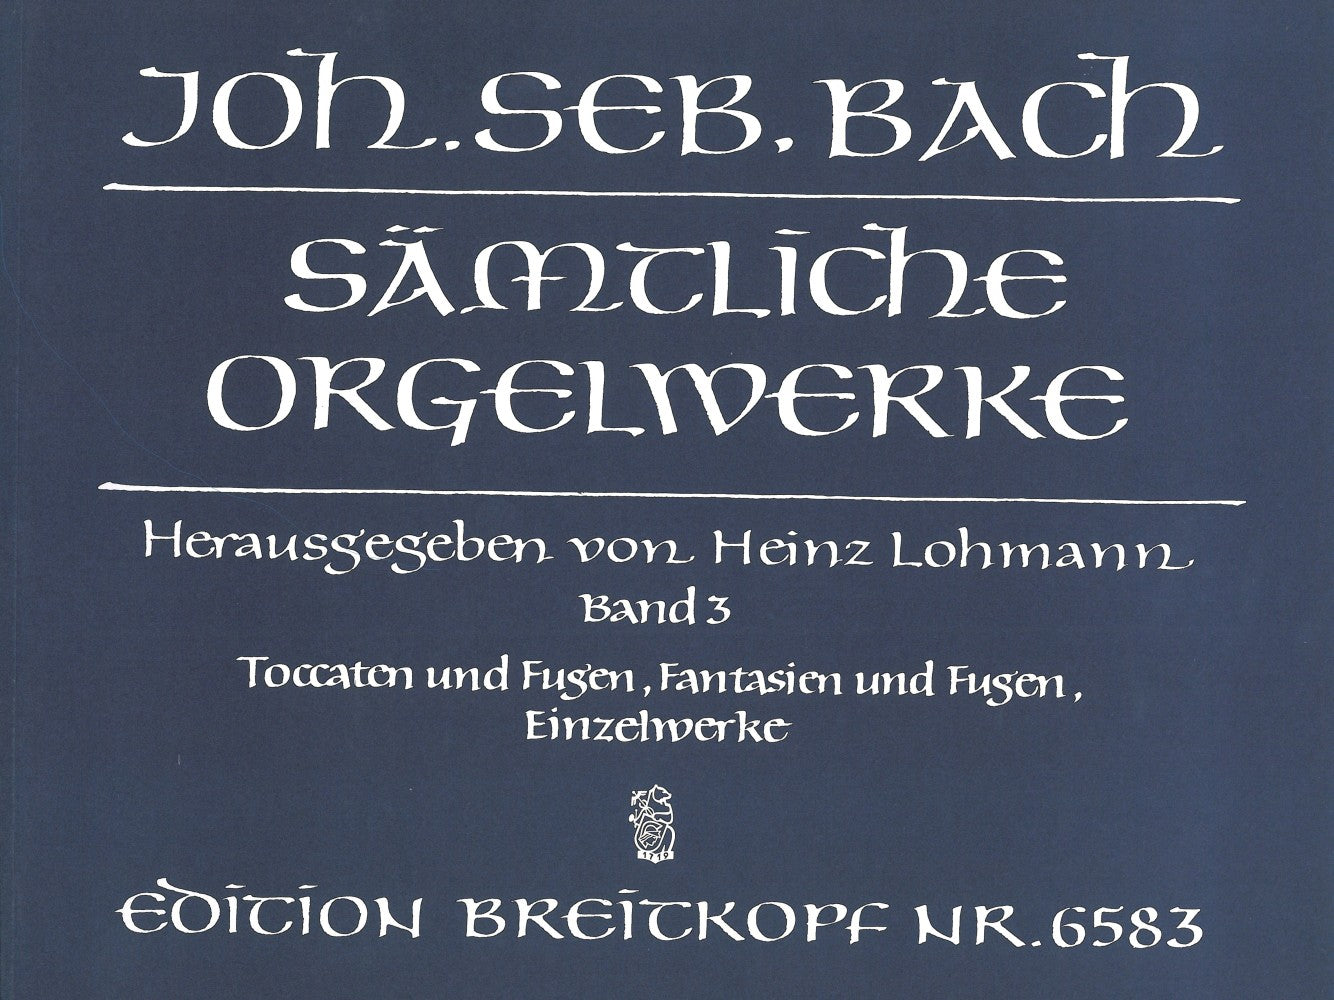 Bach: Toccatas and Fugues, Fantasias and Fugues, Single Works